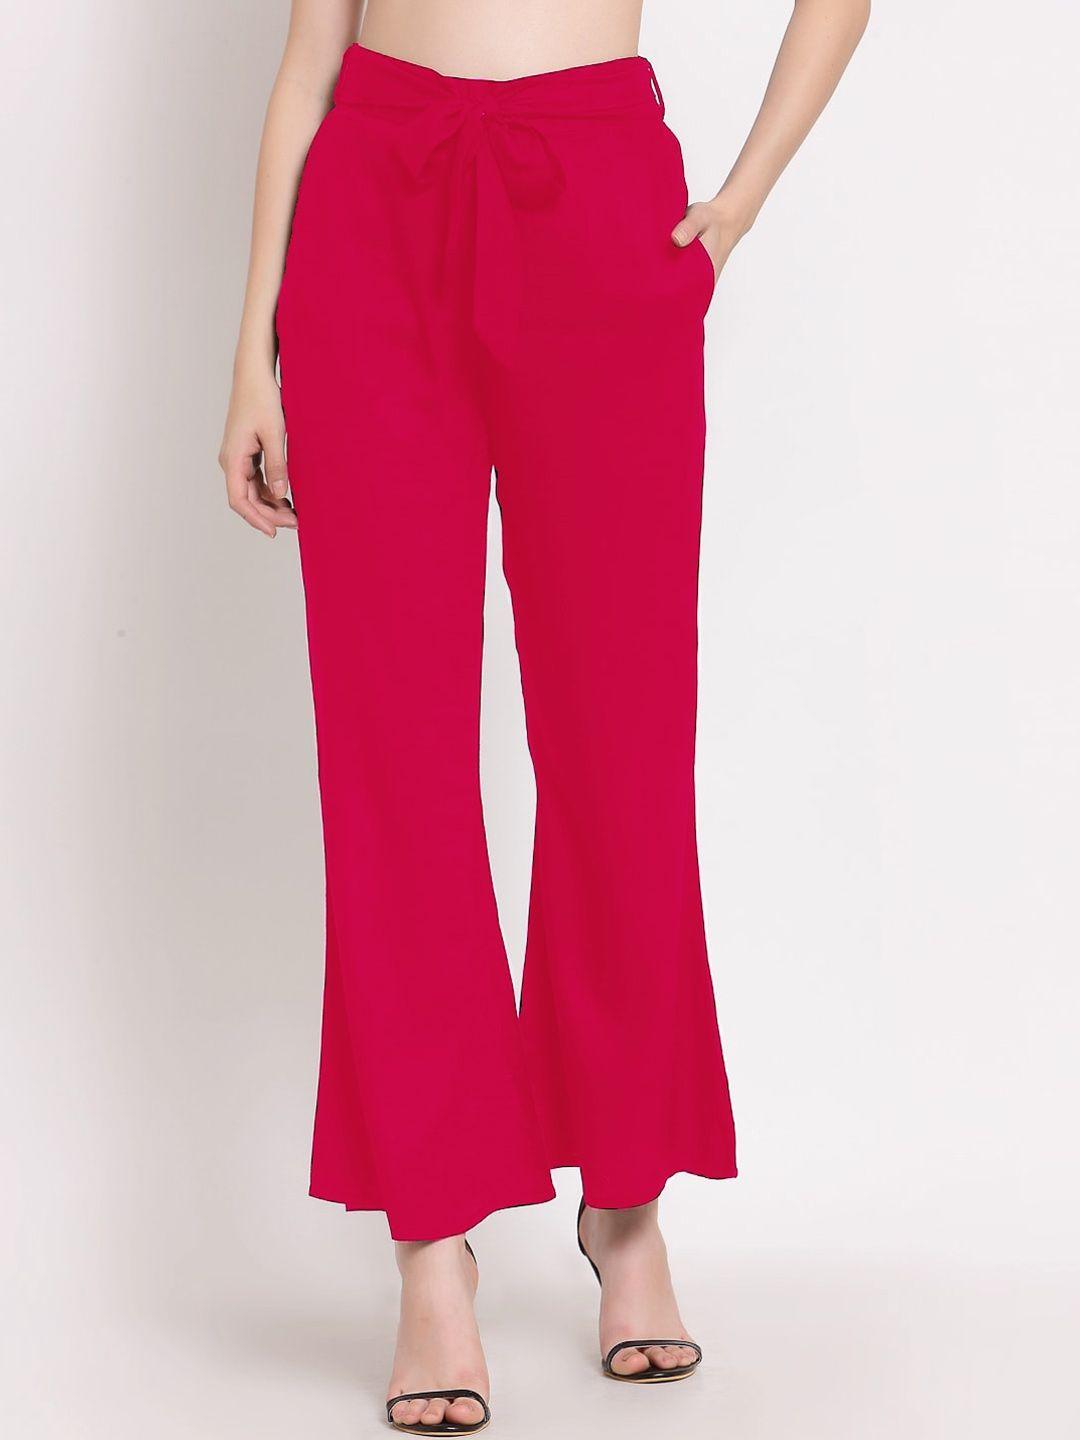 patrorna-women-plus-size-mid-rise-smart-straight-plain-bootcut-trousers